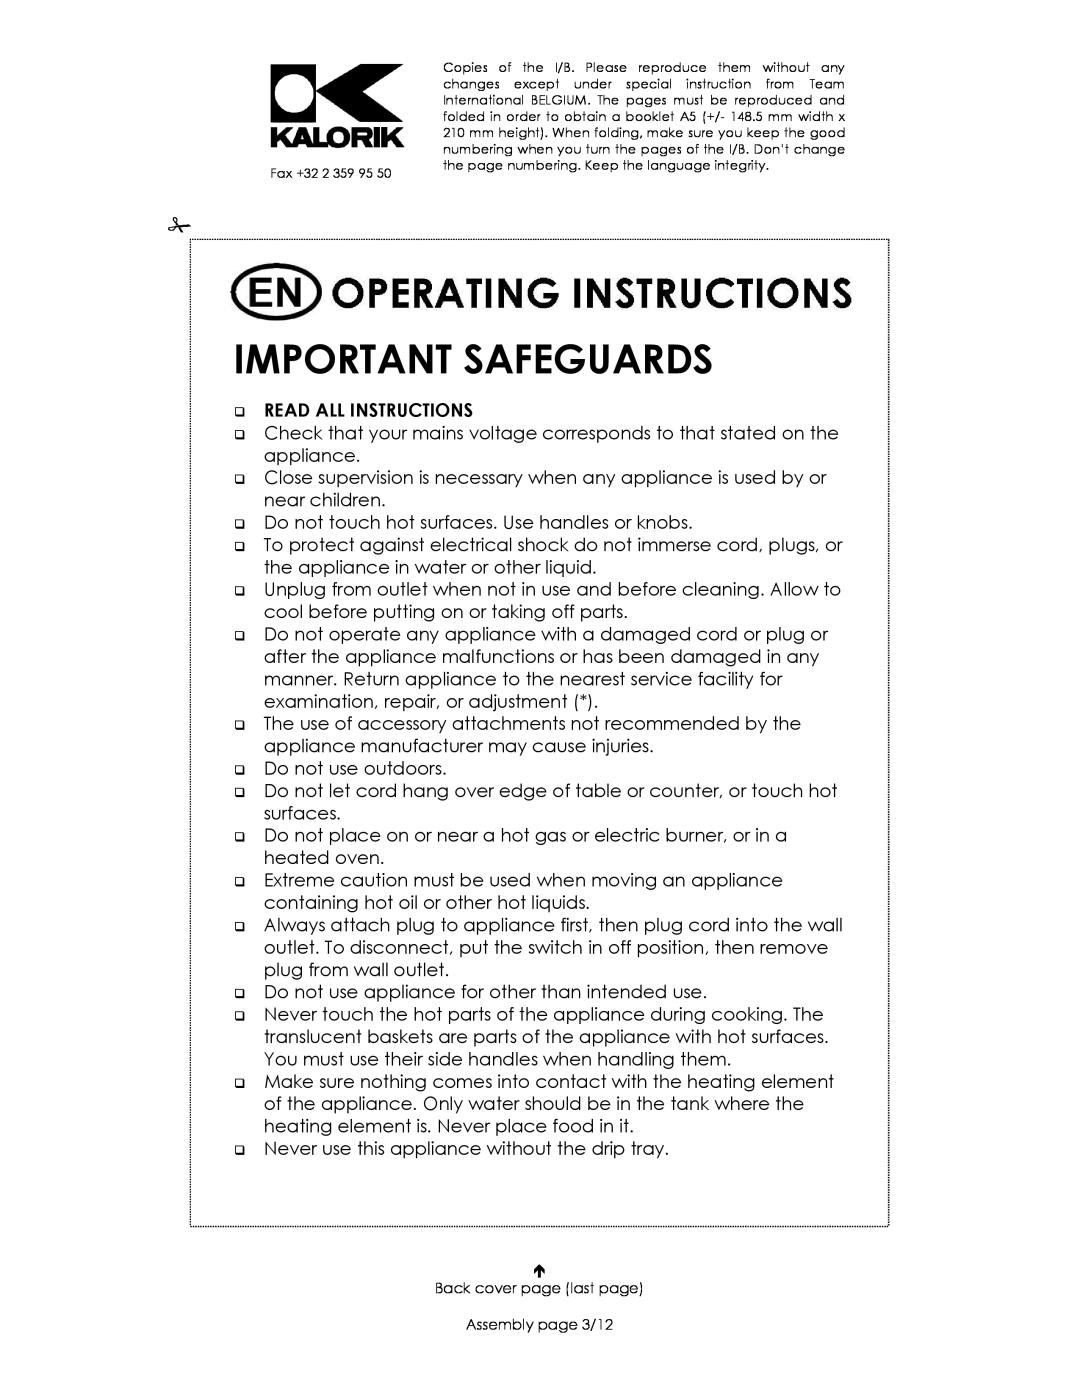 Kalorik USK DG 16271 manual Important Safeguards 